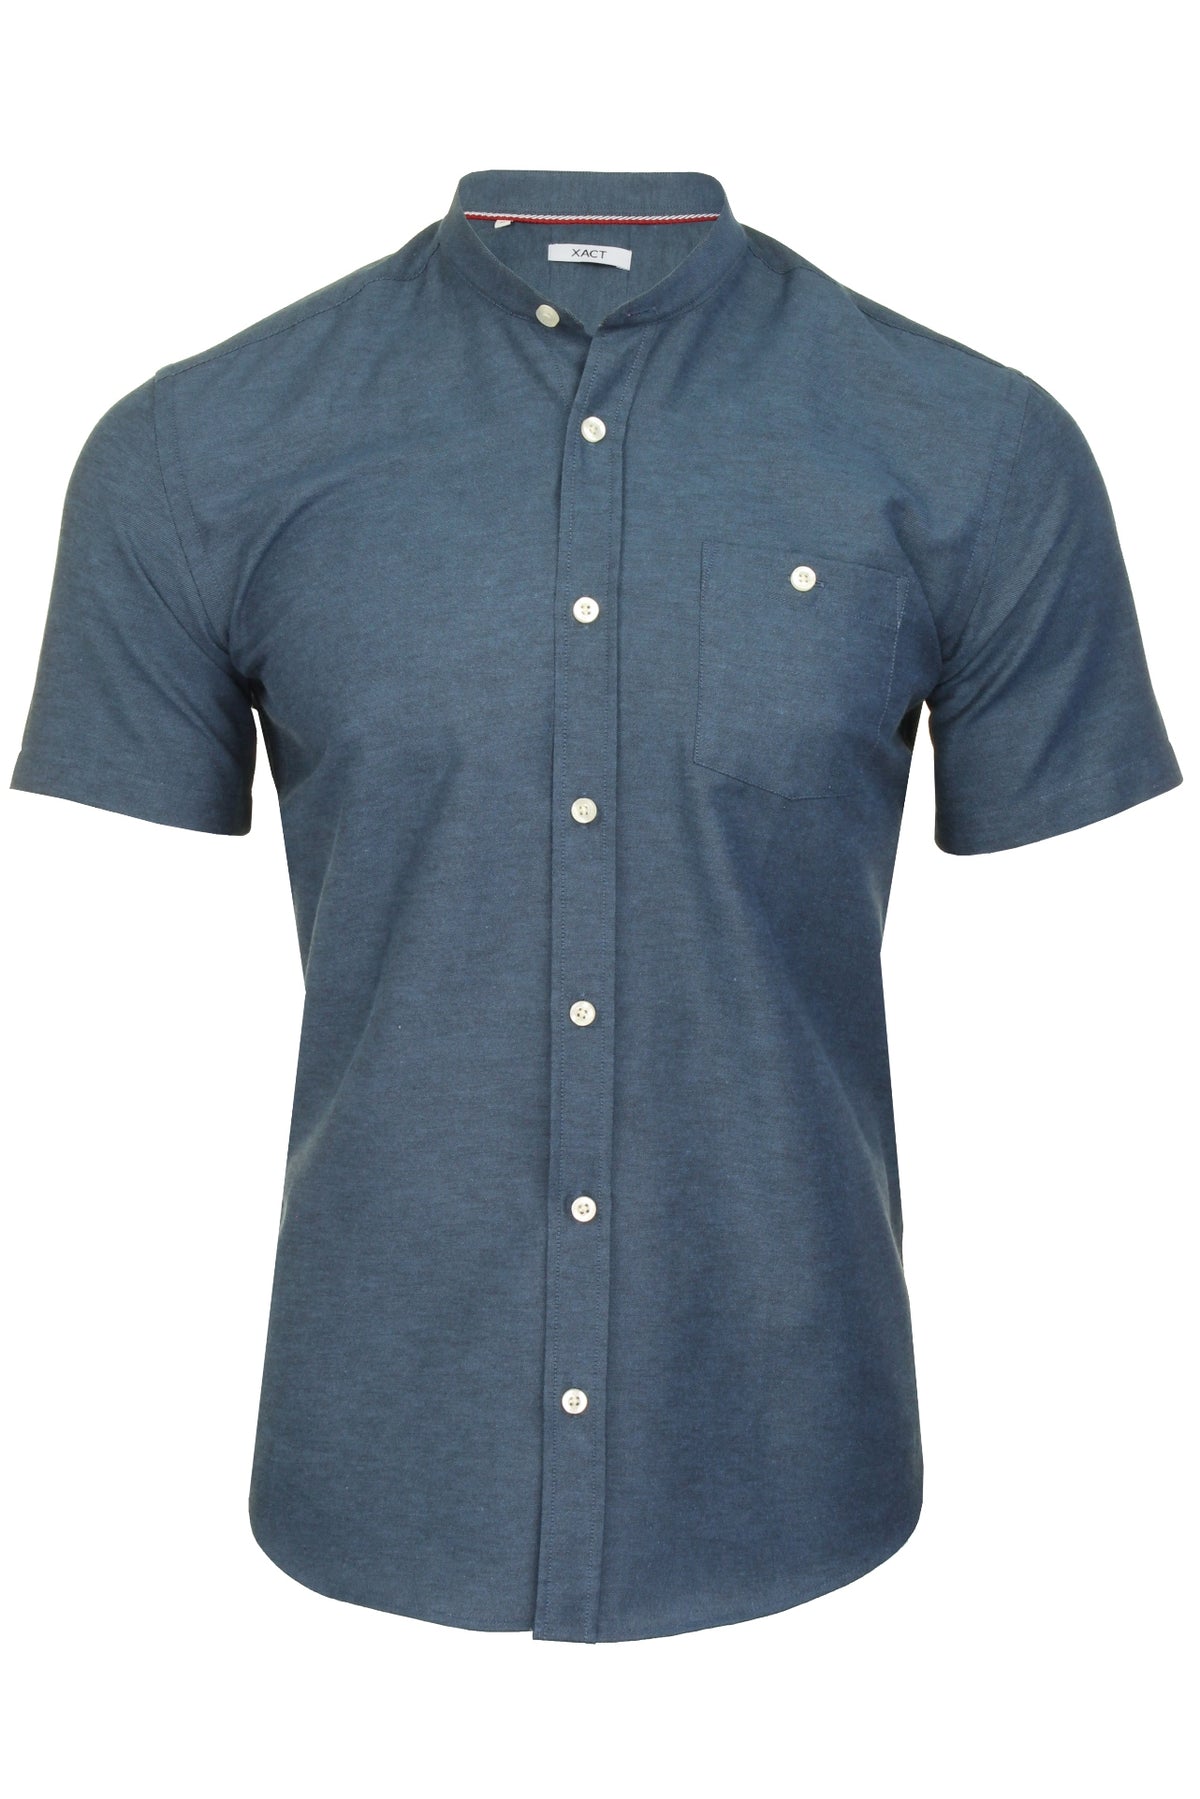 Xact Men's Grandad Collar Oxford Shirt Slim Fit Short Sleeved, 01, Xsh1022, Denim Blue